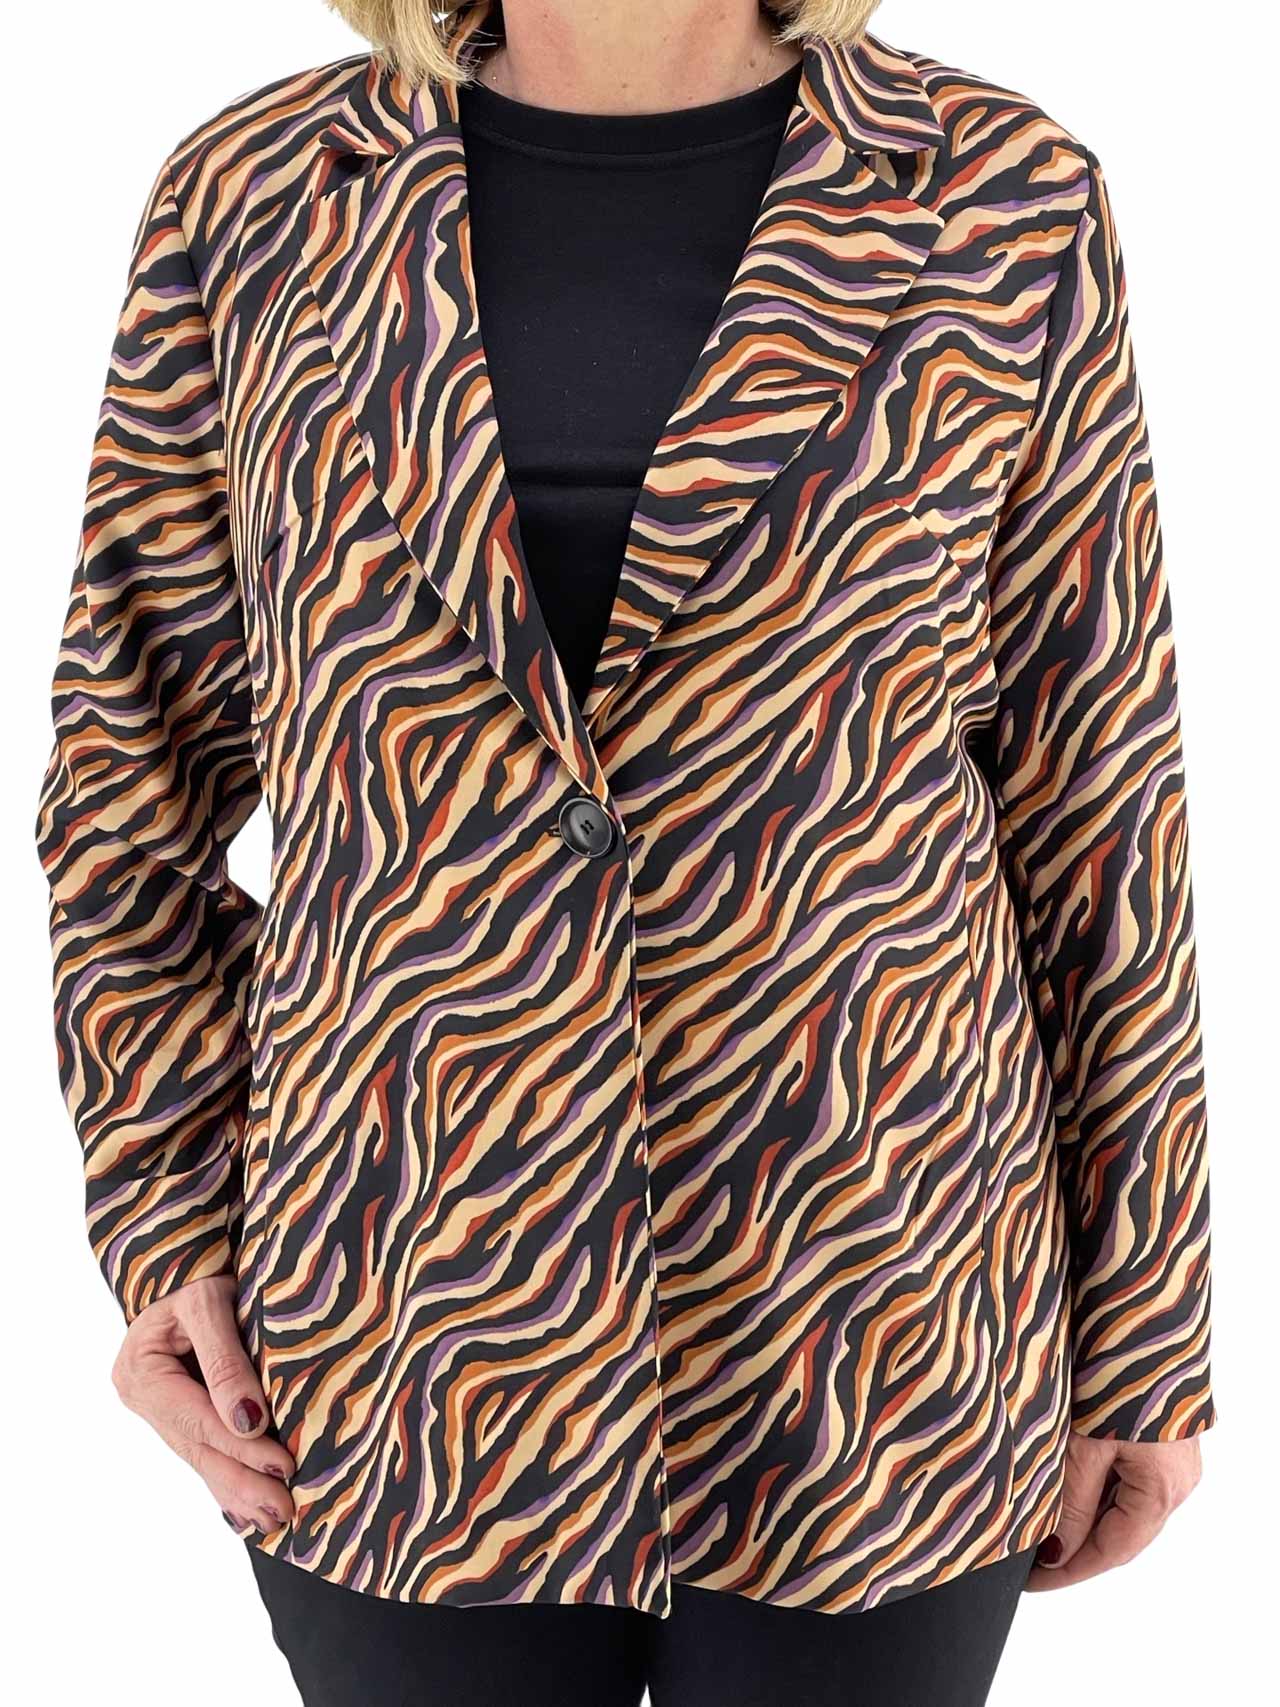 Jacket women's one-button jacket code 2241001